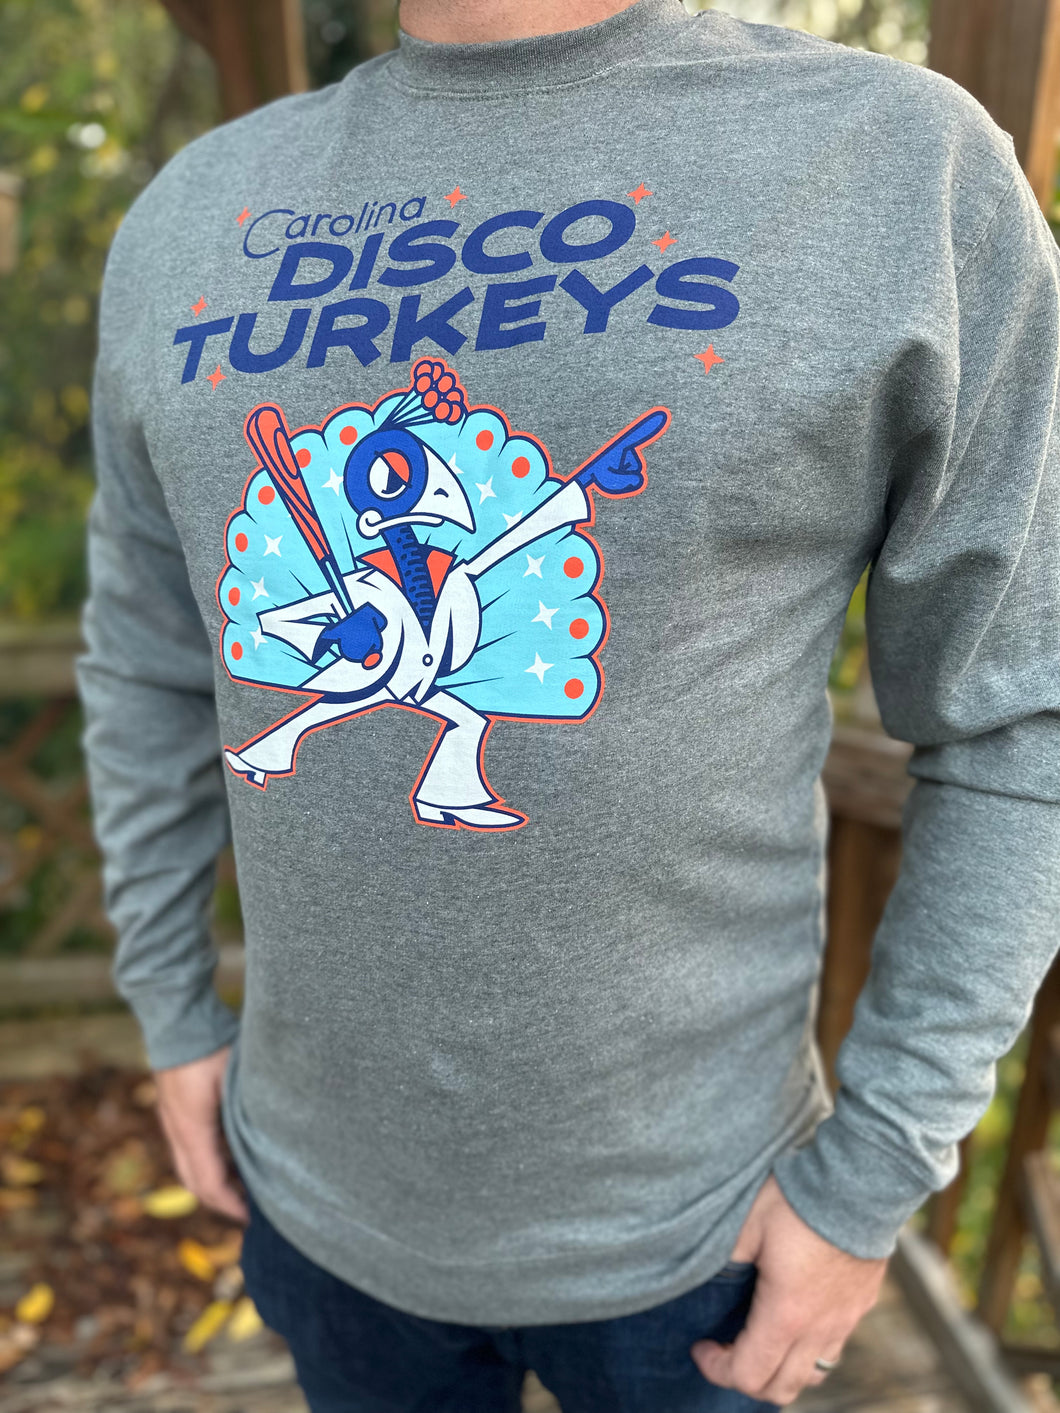 Disco Turkeys Crew Neck Sweatshirt - Full logo